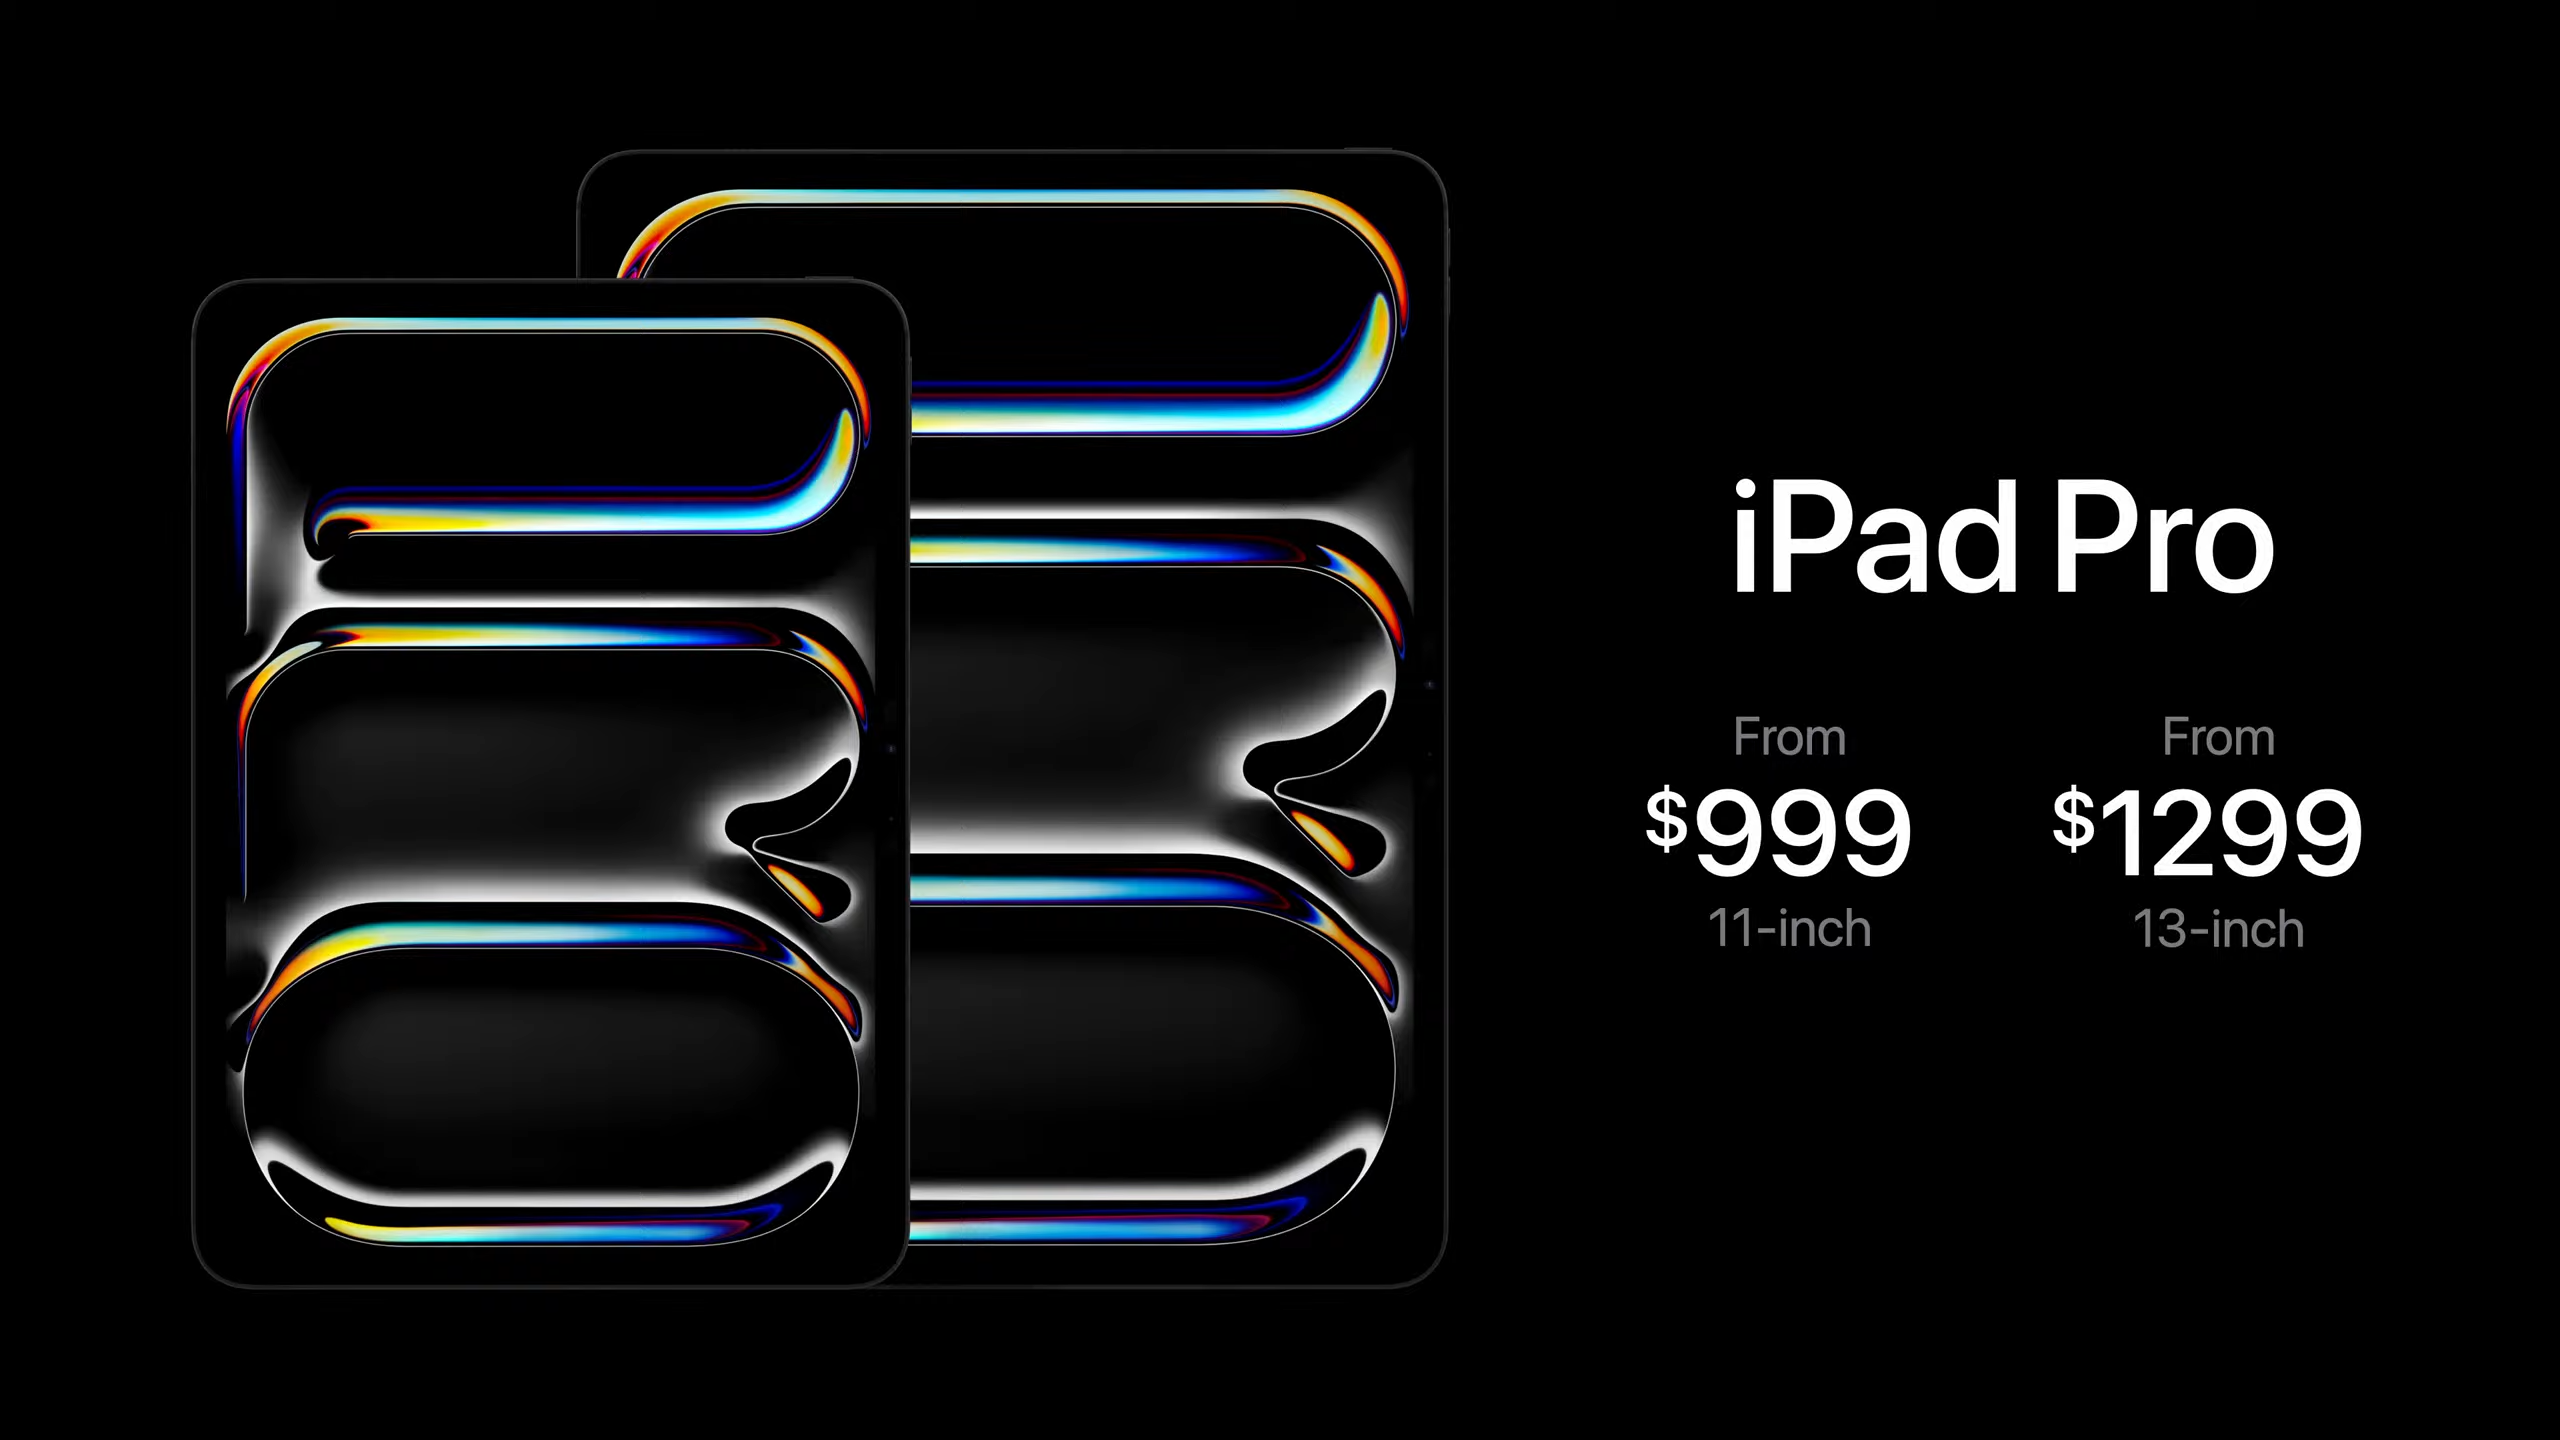 iPad Pro Pricing